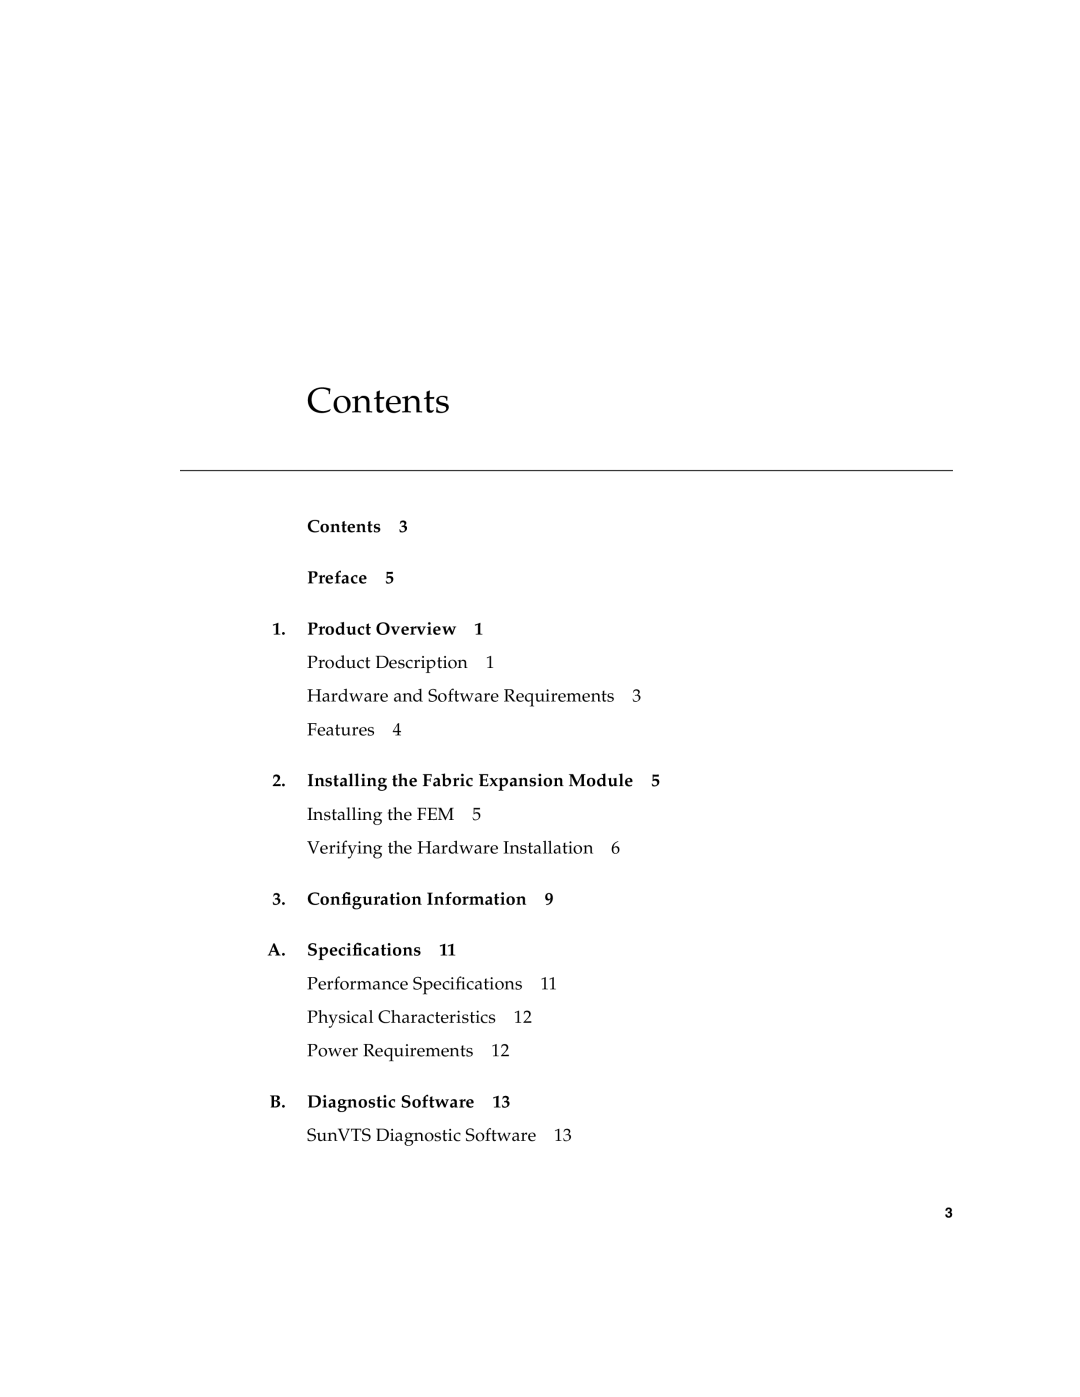 Sun Microsystems T6320 manual Contents Preface 1. Product Overview 1 Product Description, B. Diagnostic Software 